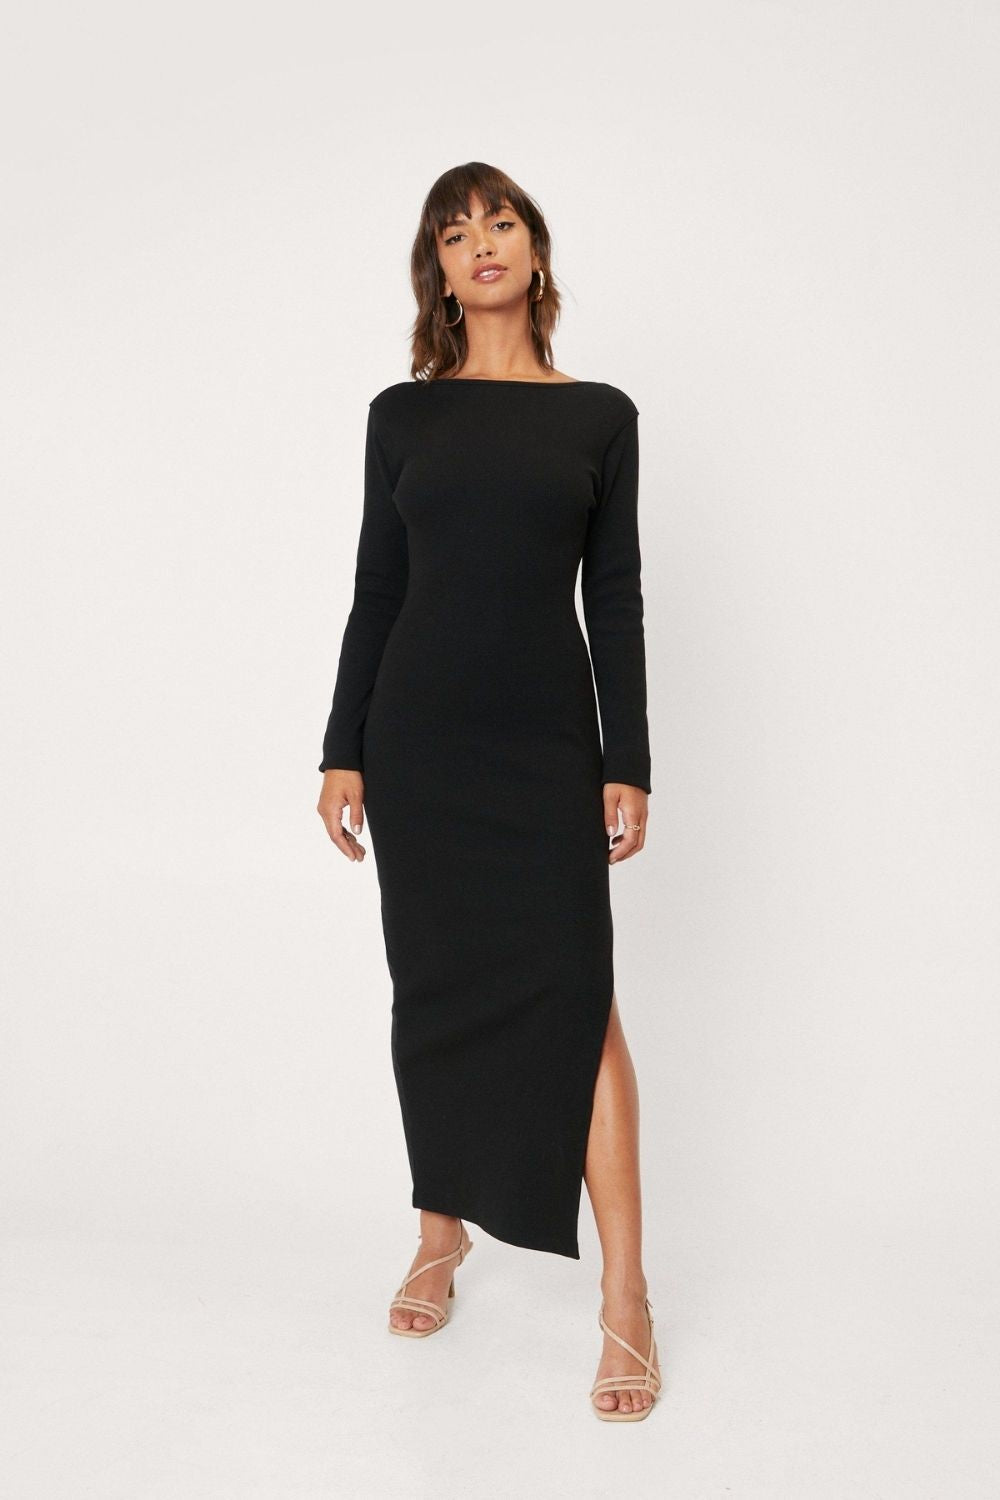 Solid Bodycon Maxi Black Dress – Styched Fashion